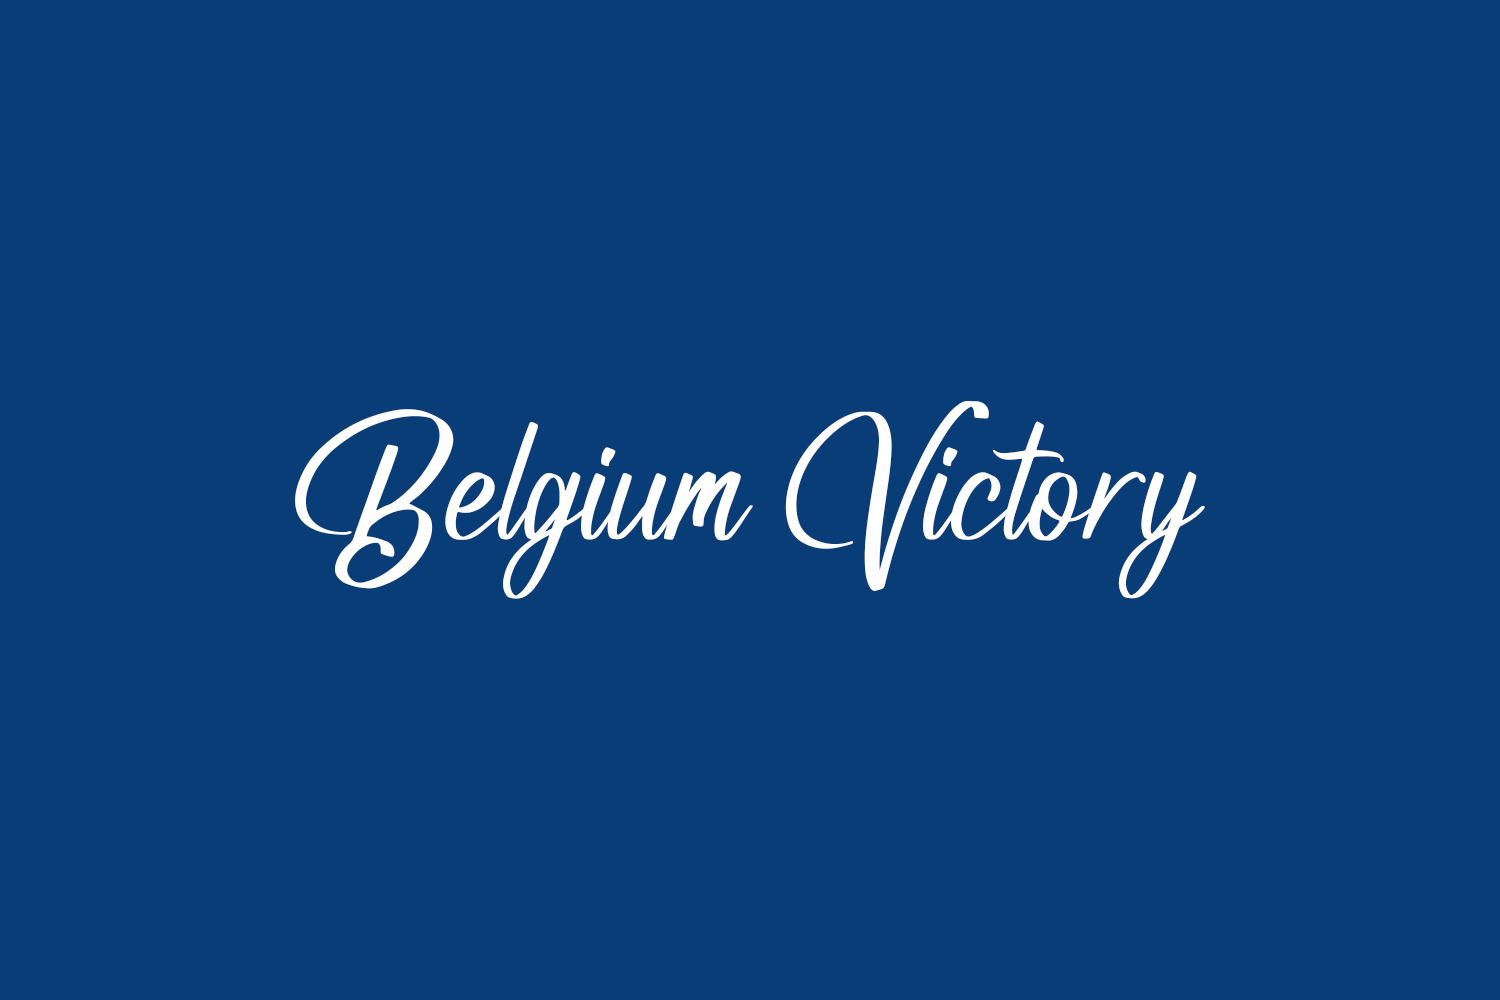 Belgium Victory Free Font